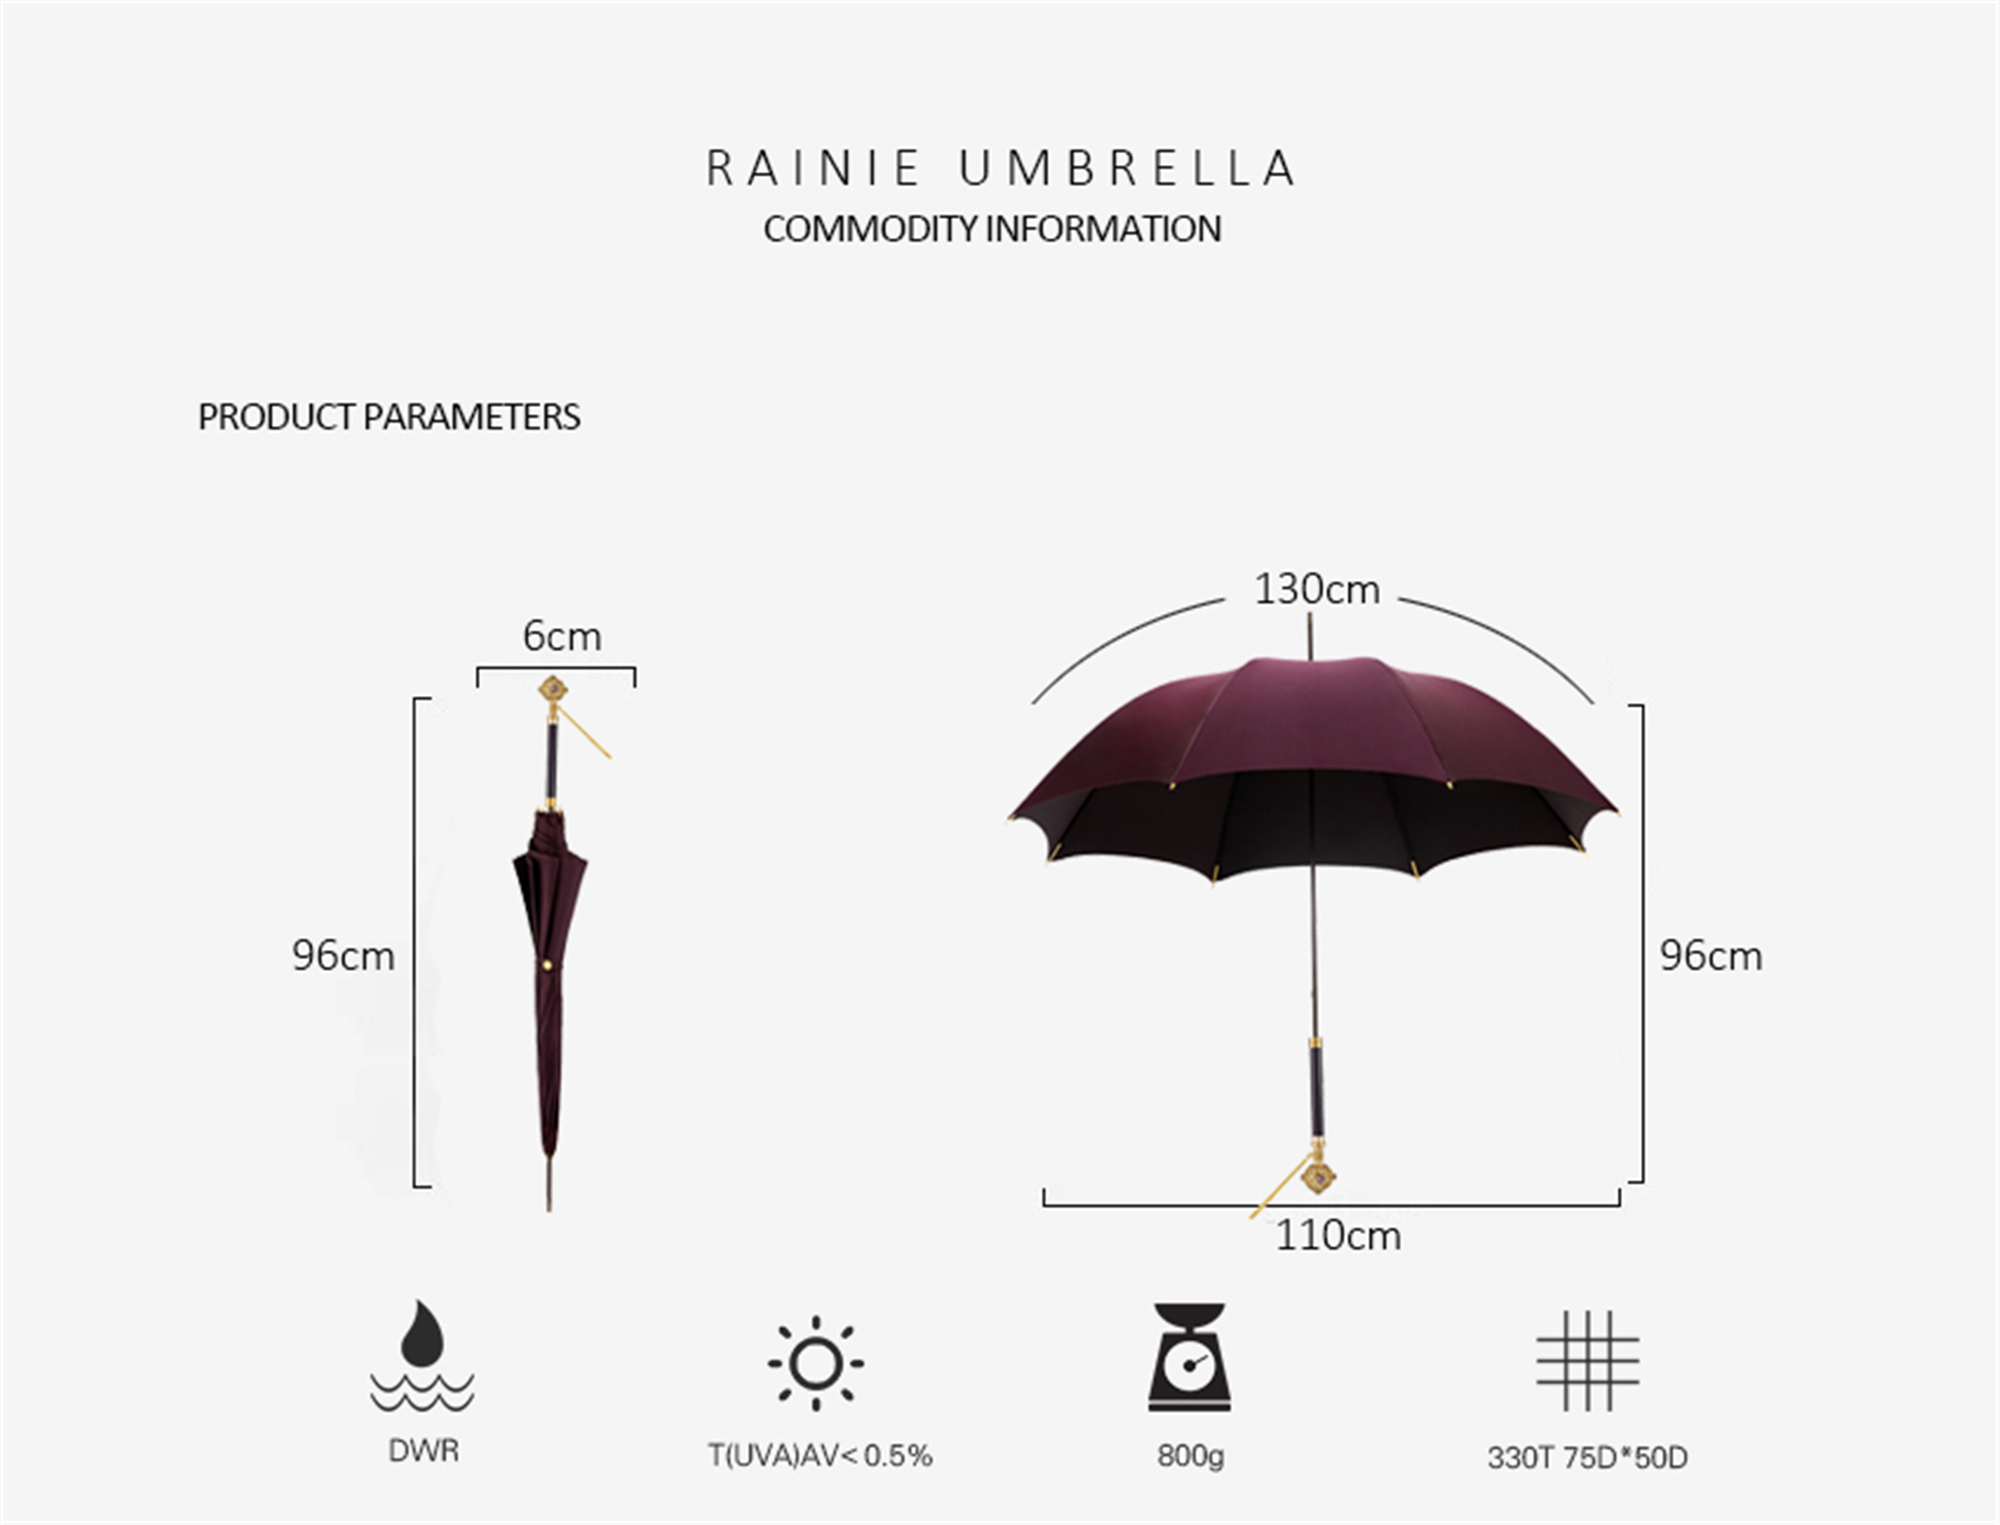 Exquisite ball umbrella with wooden handle